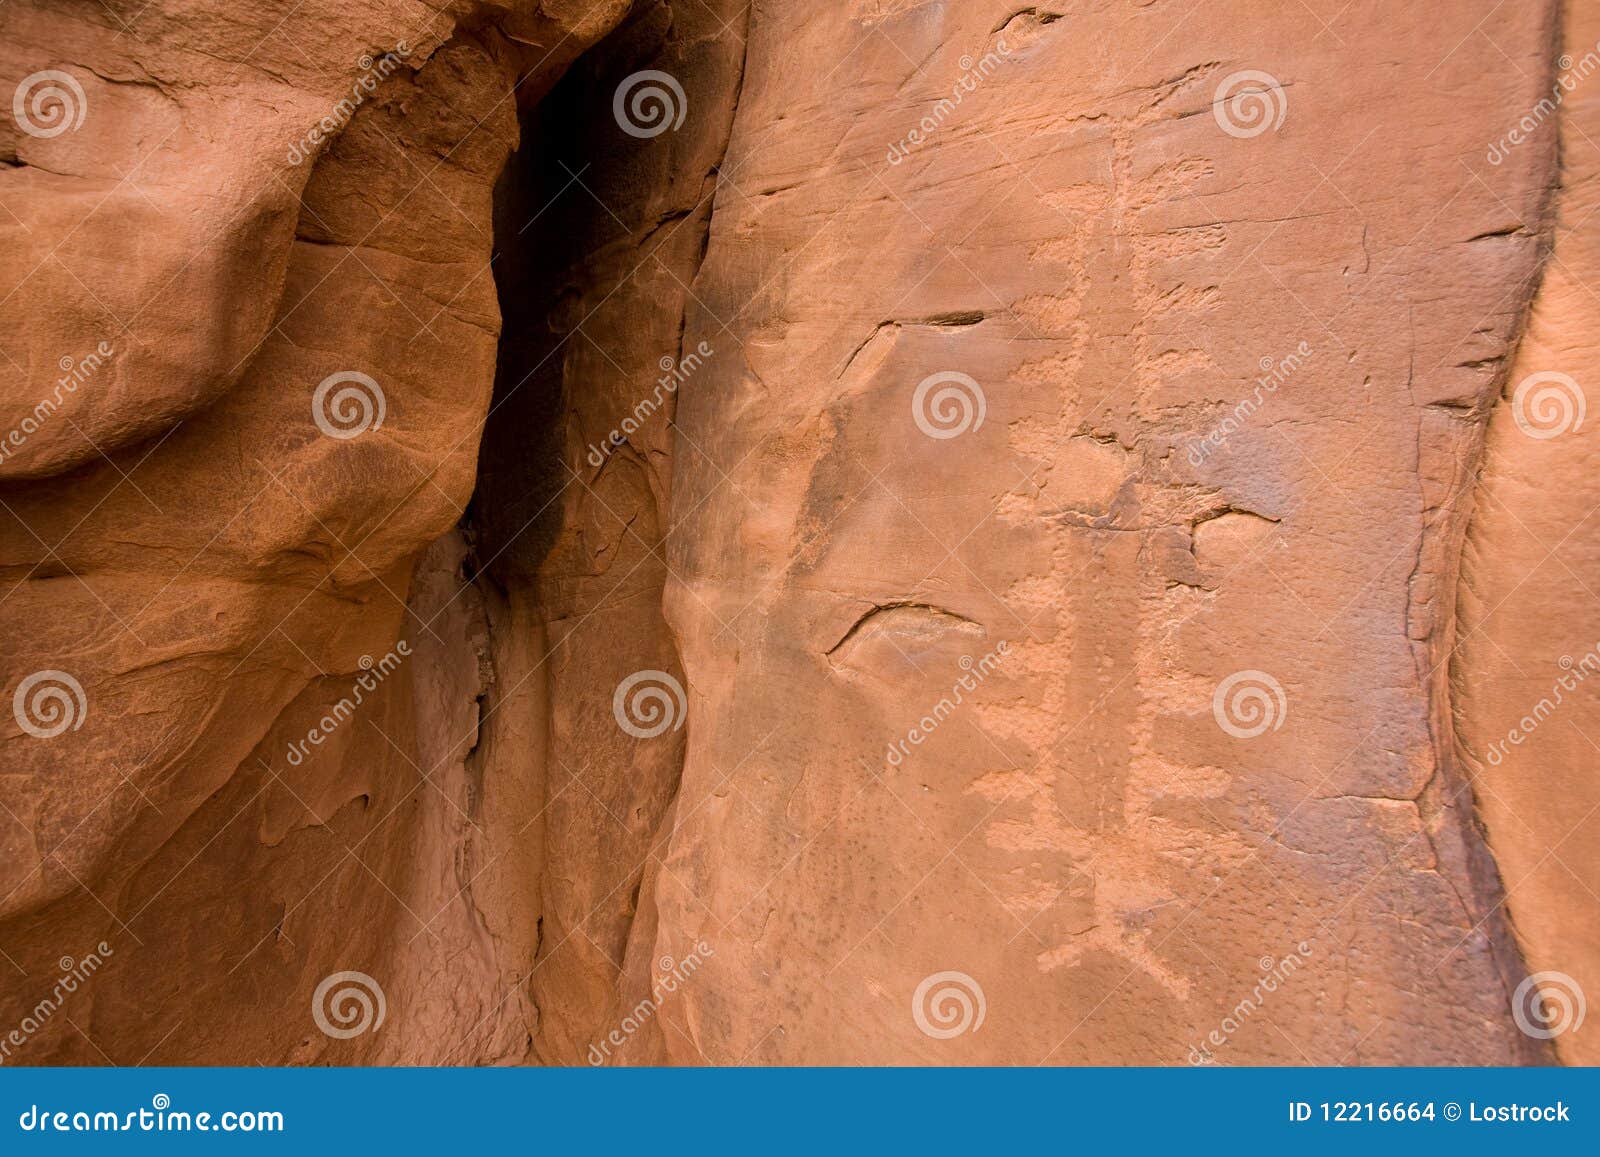 petroglyphs of anasazi canyon